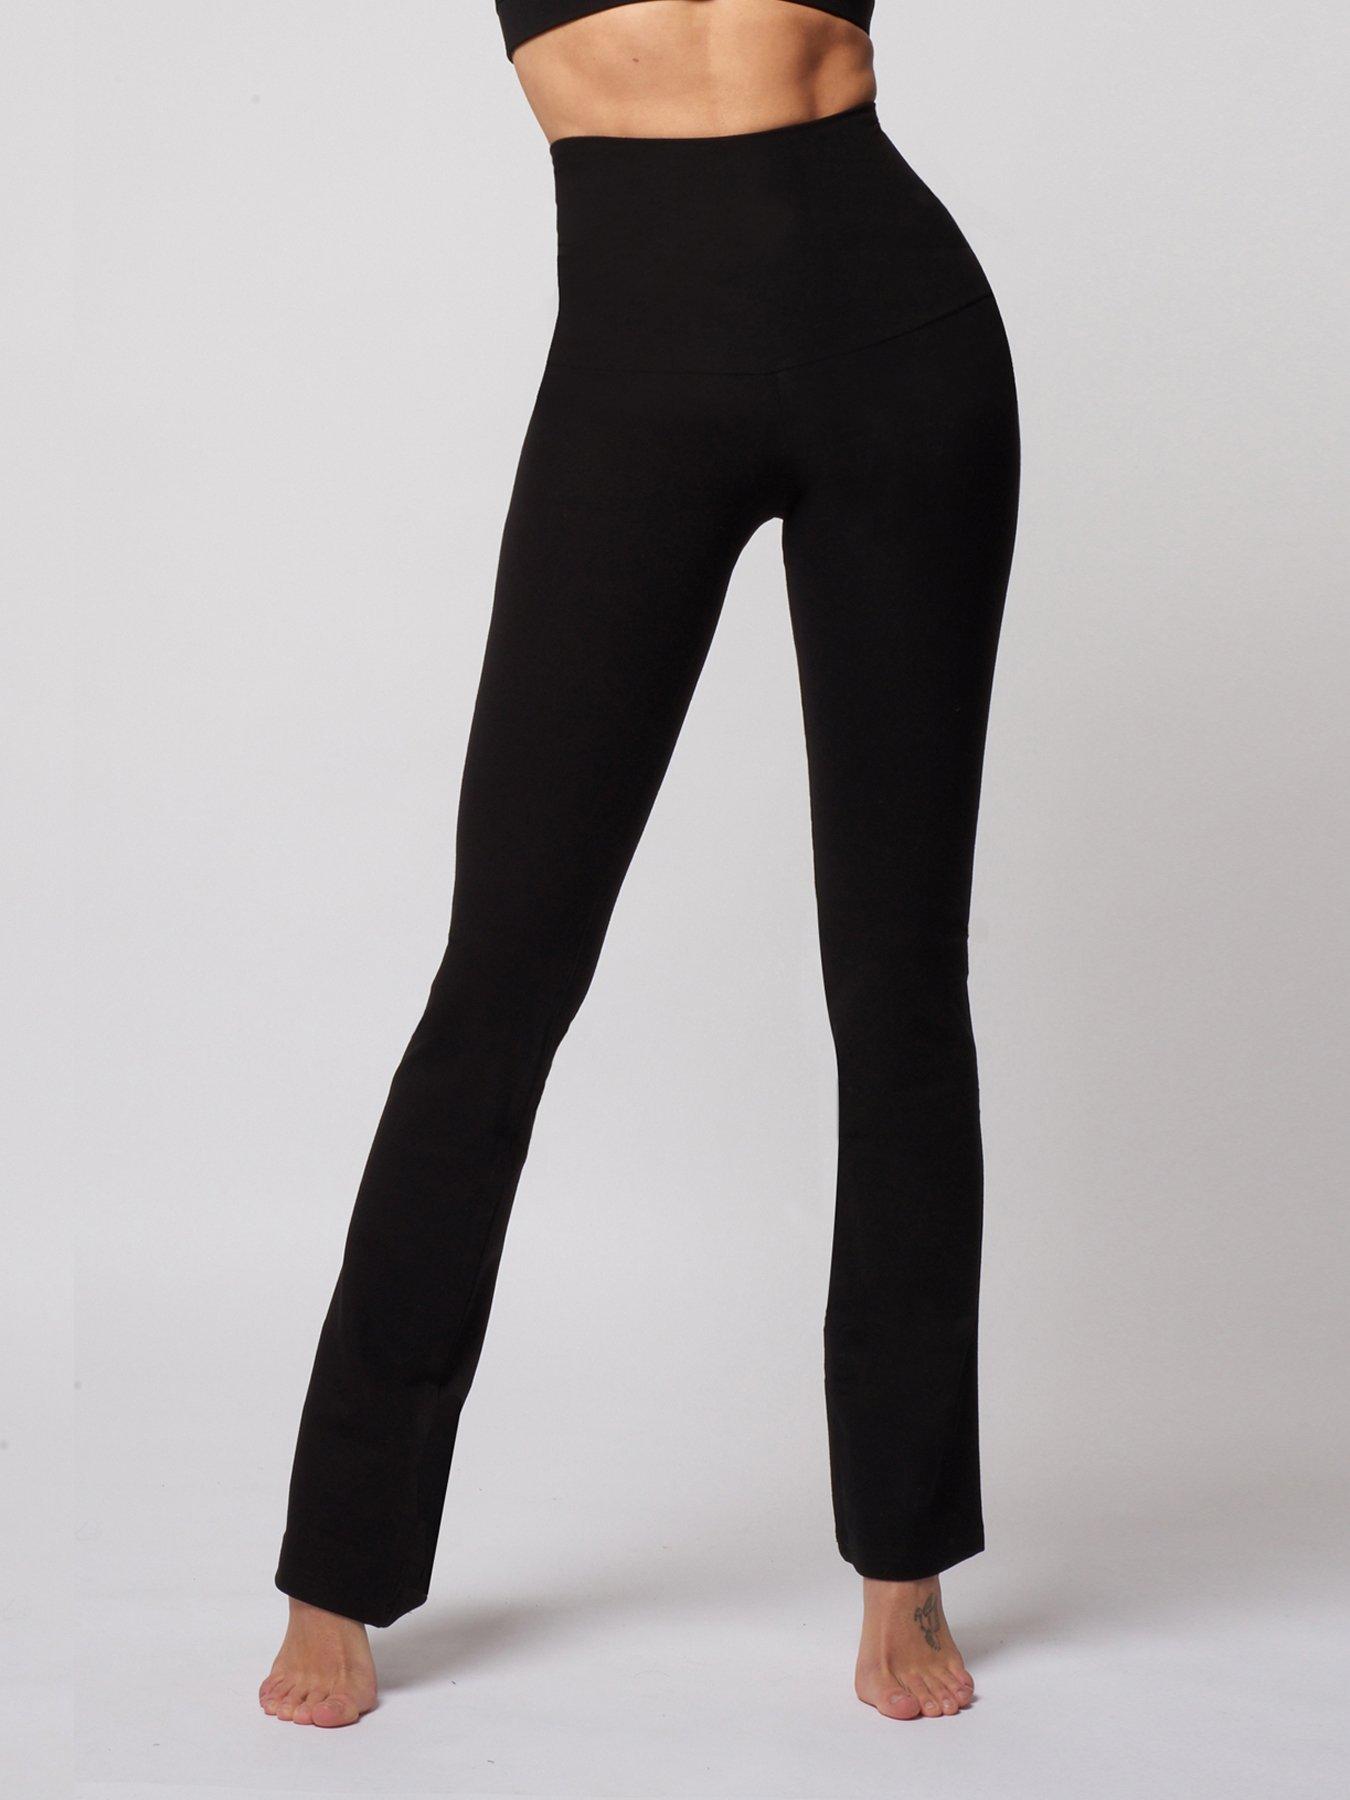 DKNY Women's Sport Tummy Control Workout Yoga Leggings, Black/White, Medium